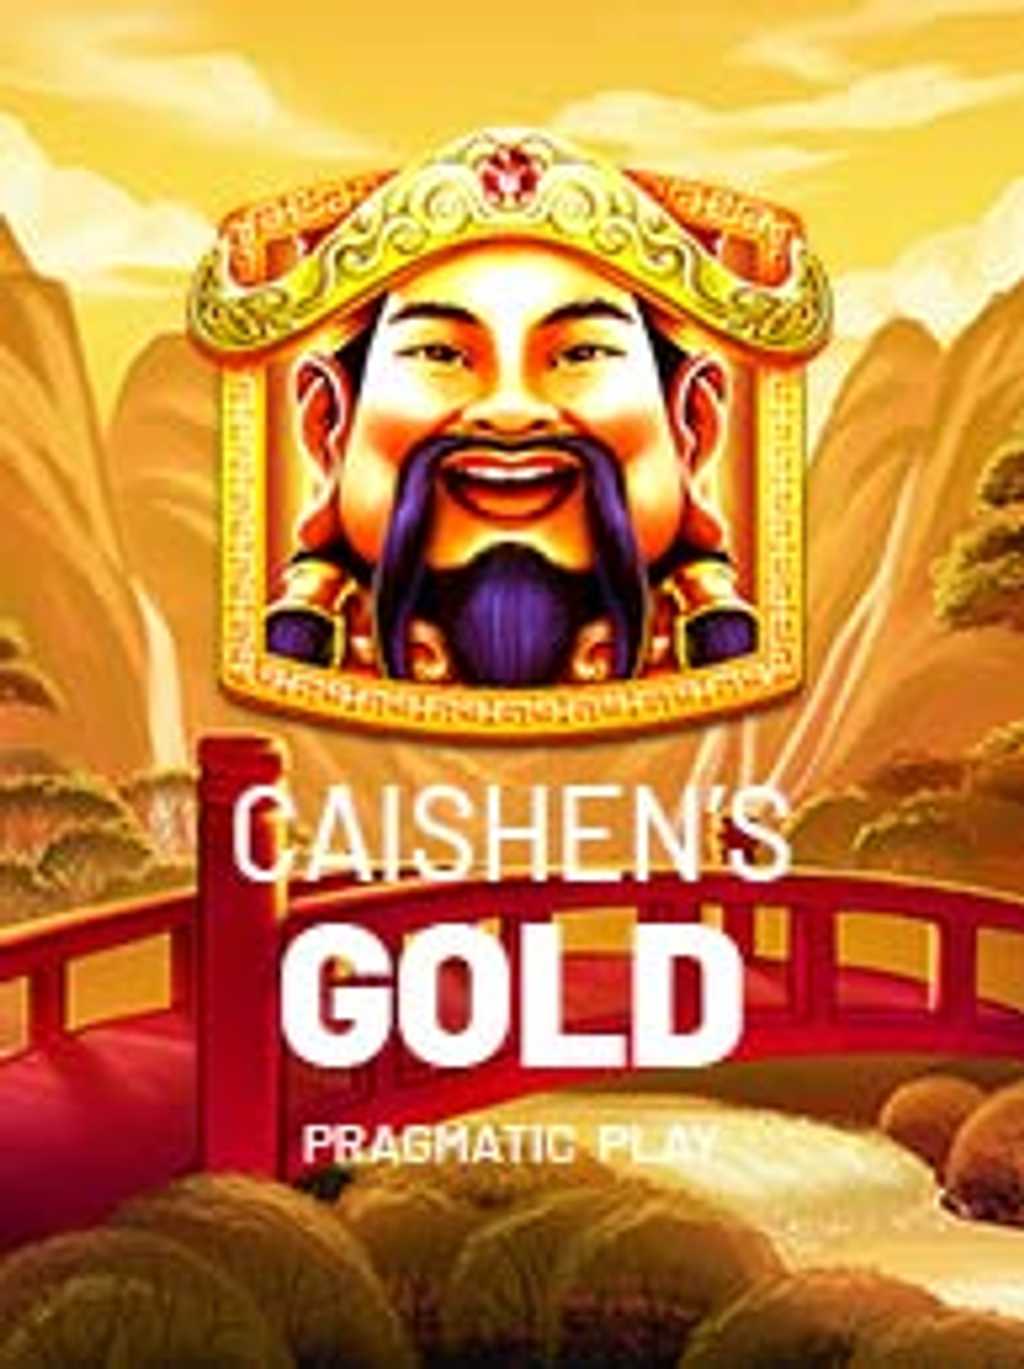 Casihens Gold